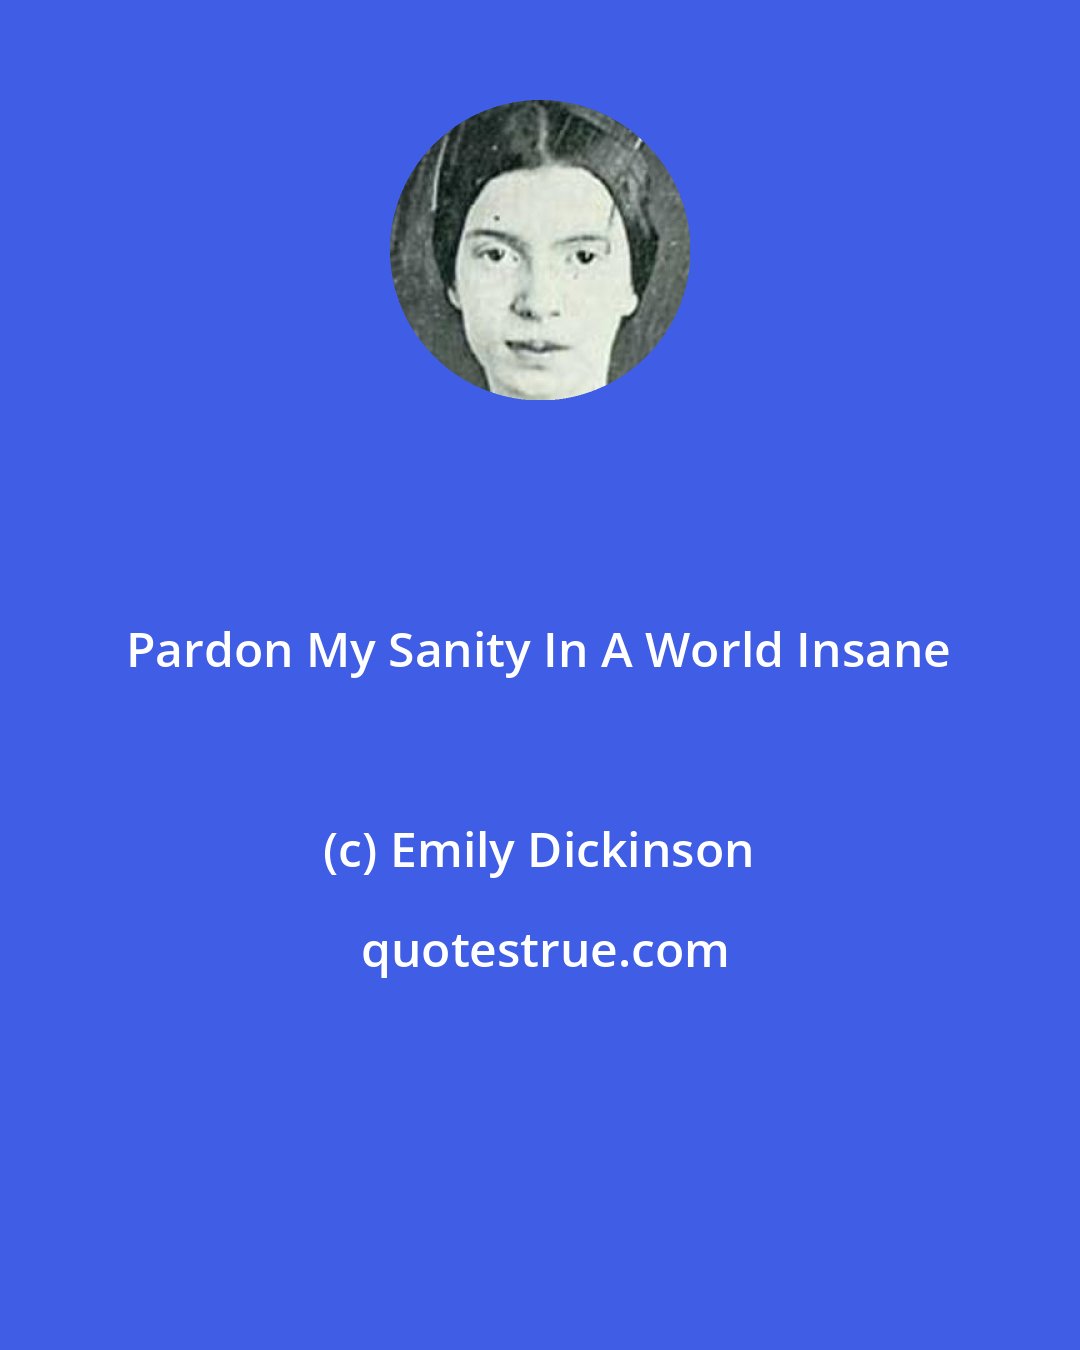 Emily Dickinson: Pardon My Sanity In A World Insane